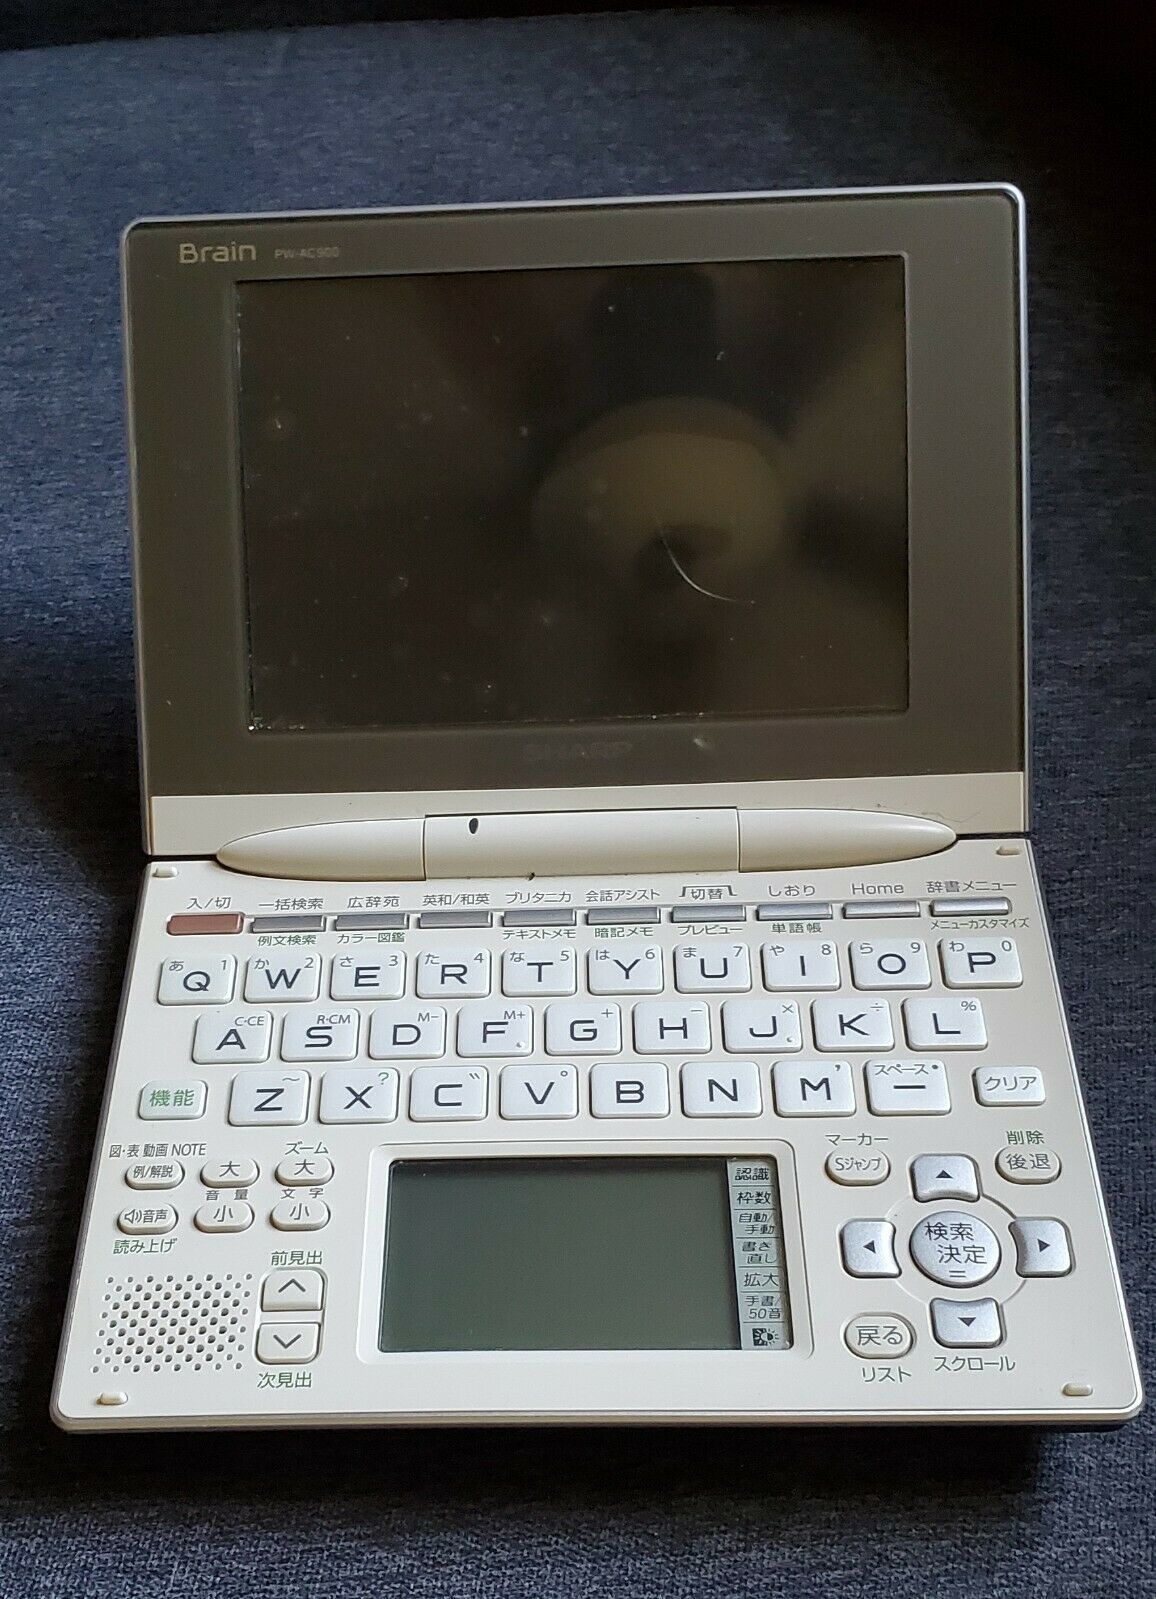 PW-AC900 Sharp BRAIN Pocket Electronic Dictionary / Translator - $29.90